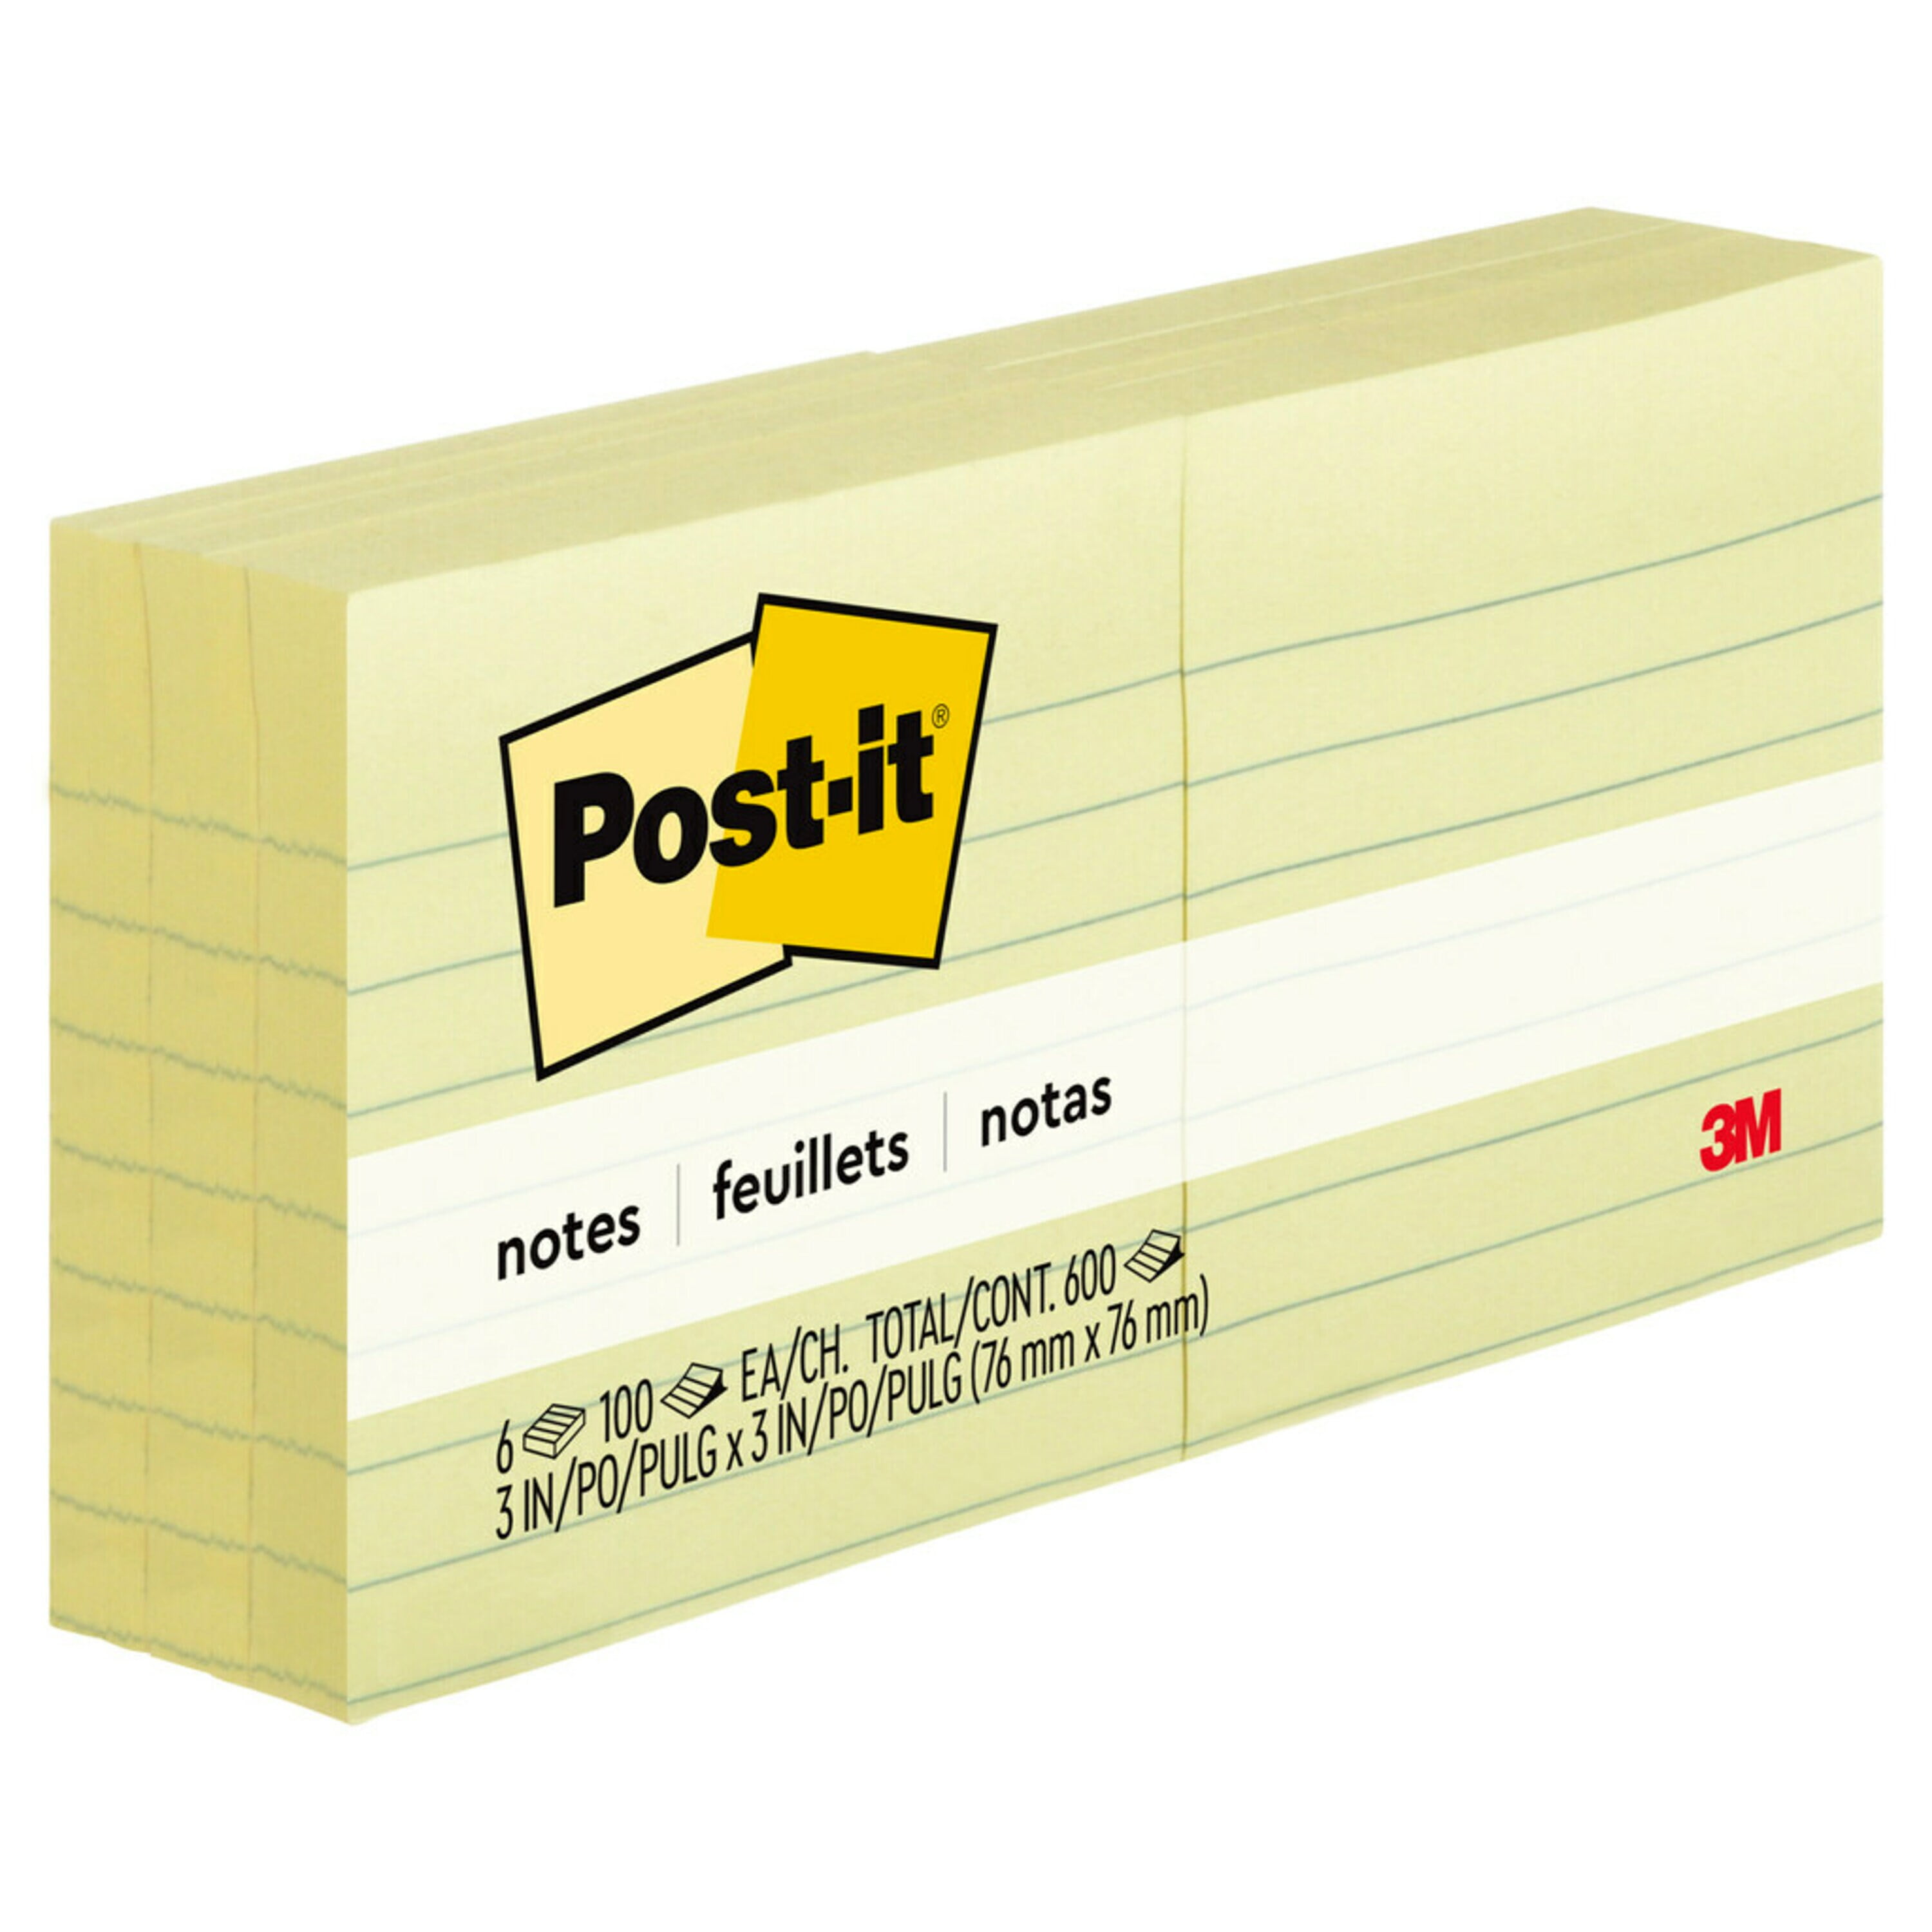 Custom Post-It Notes 3x3